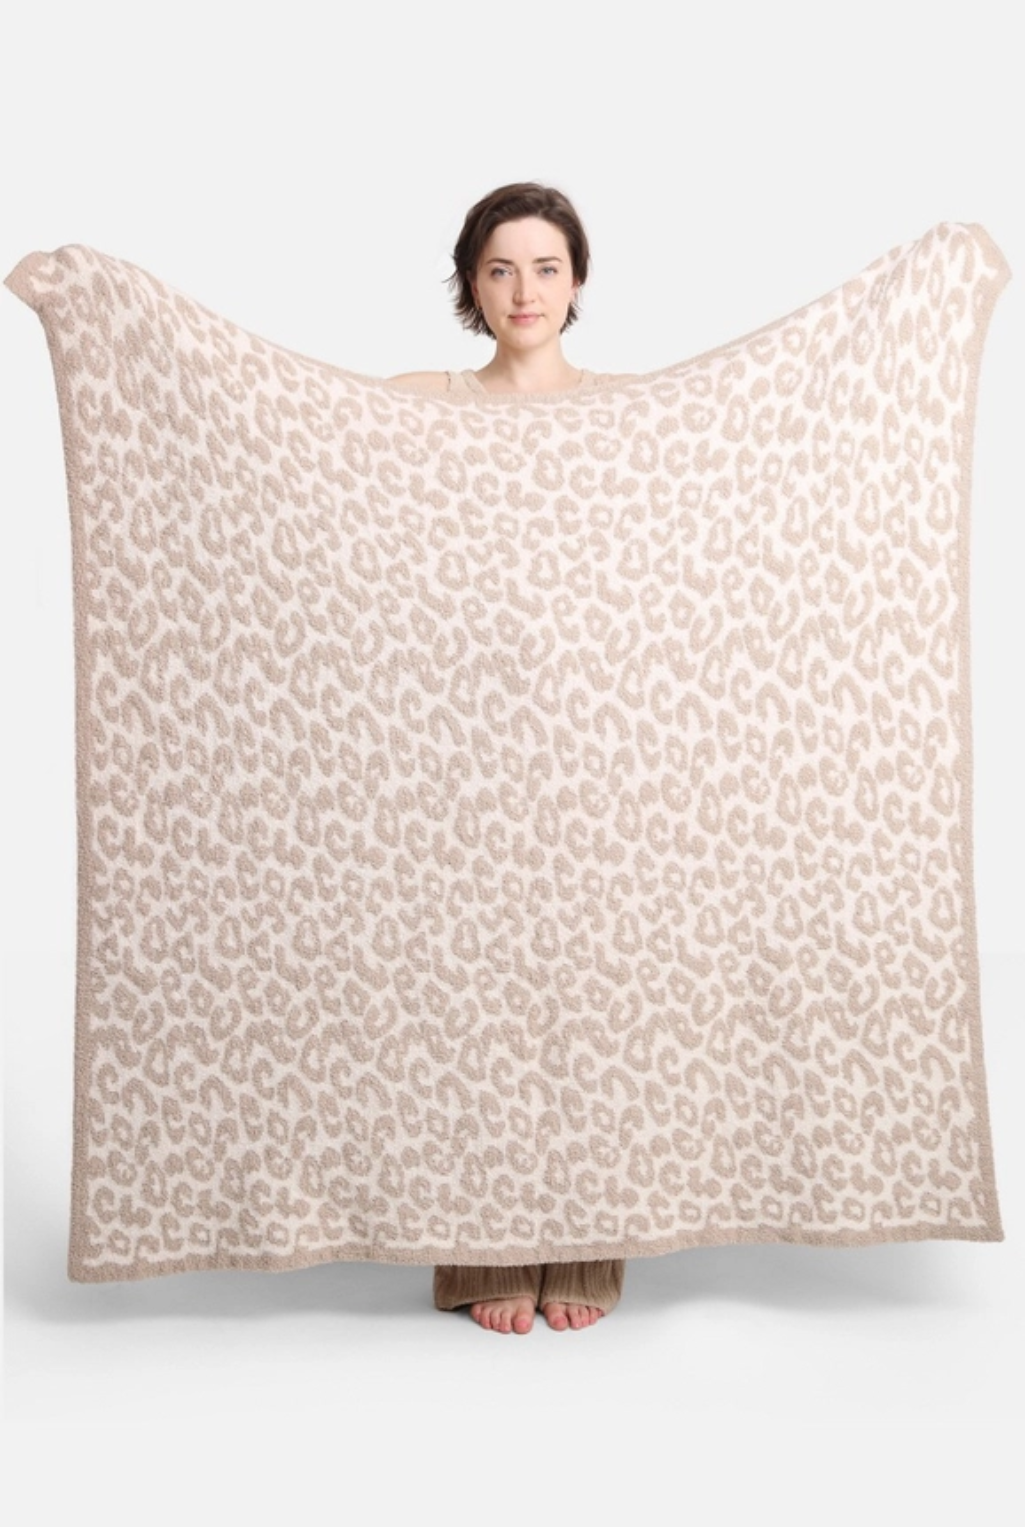 Leopard Blanket - Beige